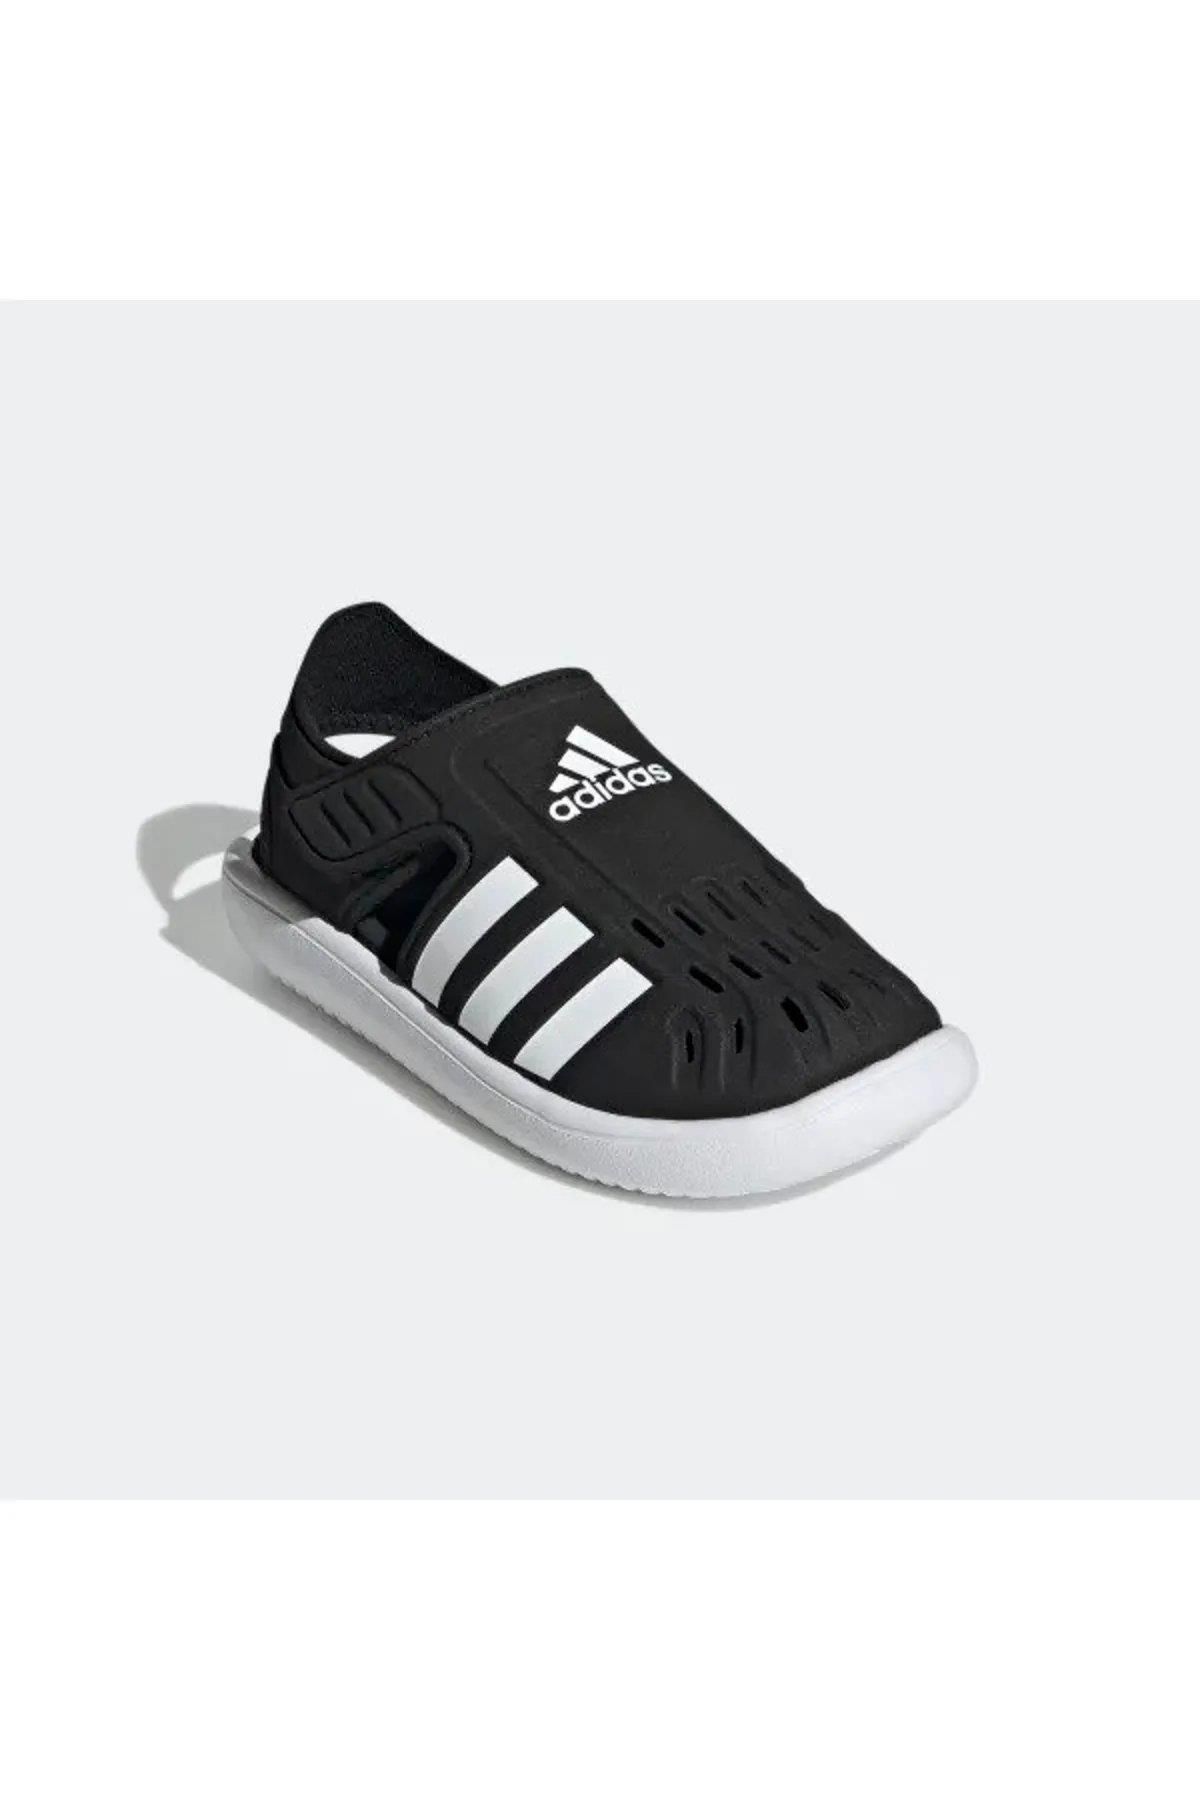 adidas water sandal c cblack/ftwwht/cblack gw0384